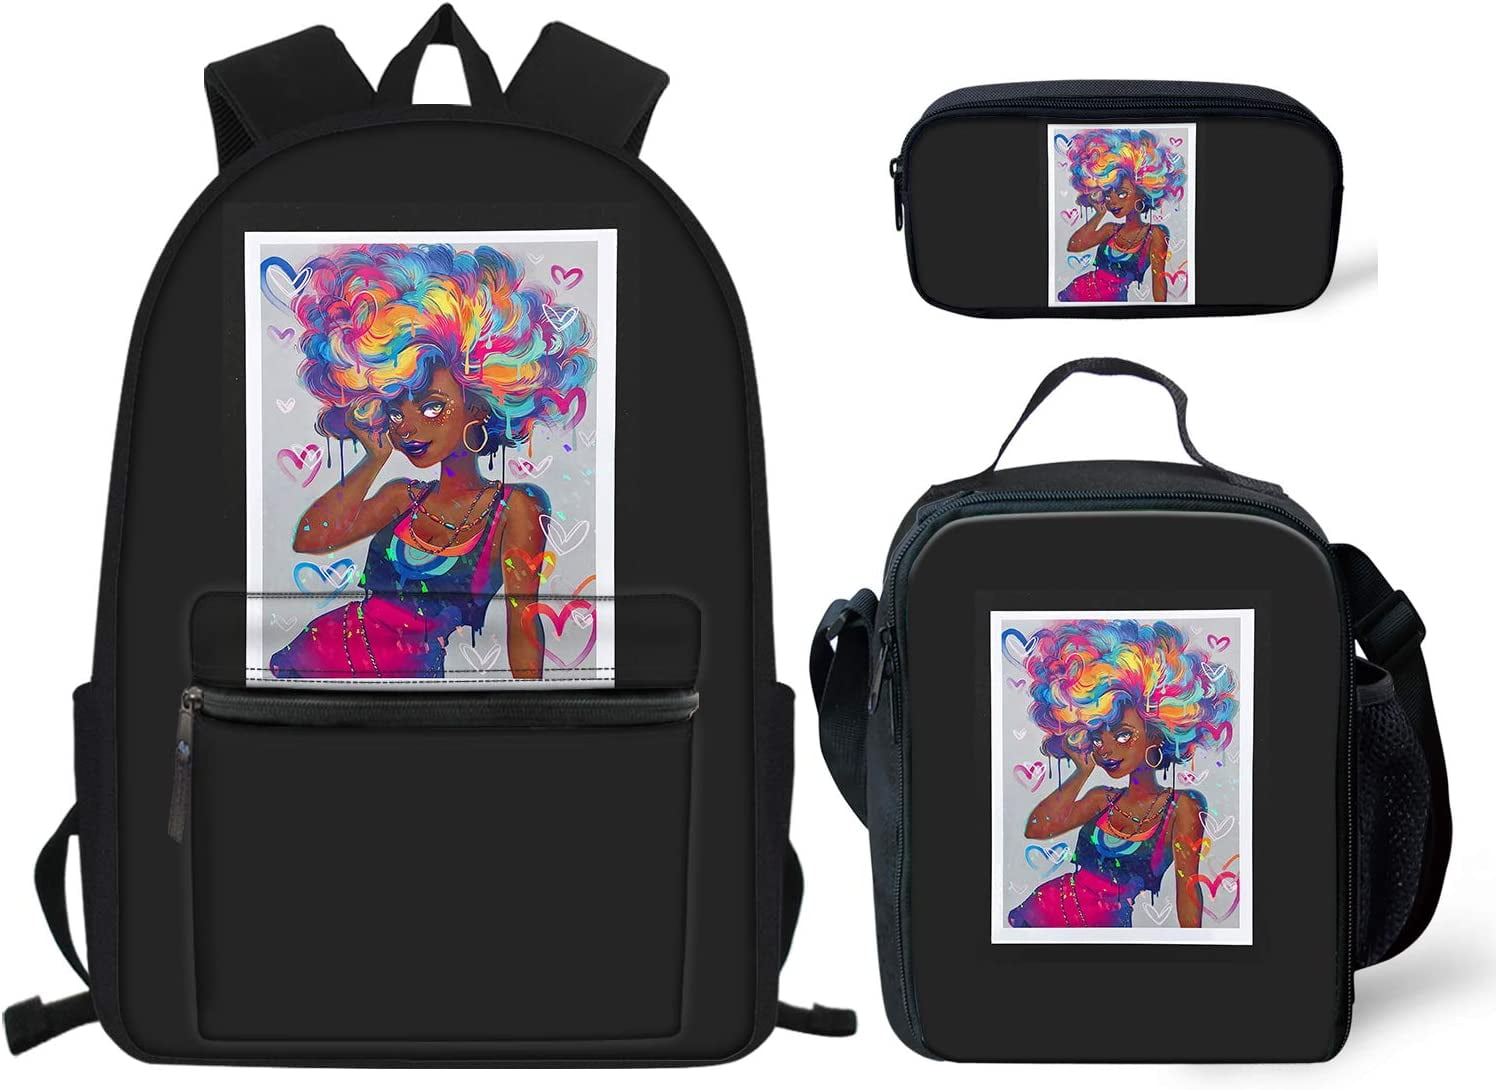  UZZUHI Afro Girl Backpack Set for Kids African American Girl  Backpack, Lunch Box, Pencil Case Black Preppy Princess Bookbag Age 6-8/10-12/14-16  Year Old : Home & Kitchen